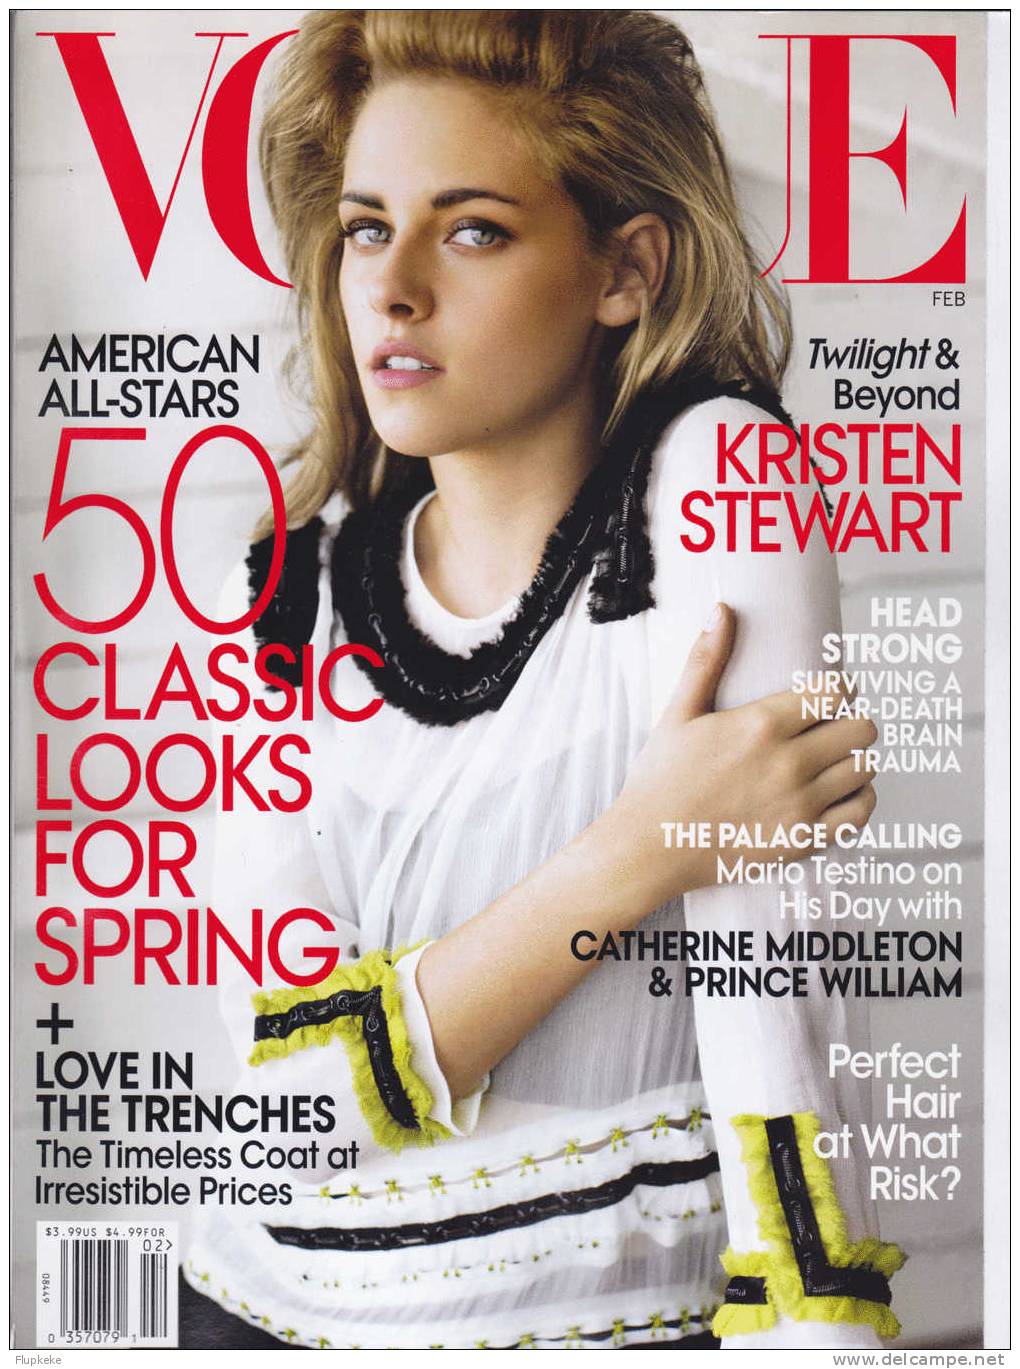 Vogue February 2011 American All-Star 50 Classic Looks For Spring Cover Kristen Stewart - Divertissement